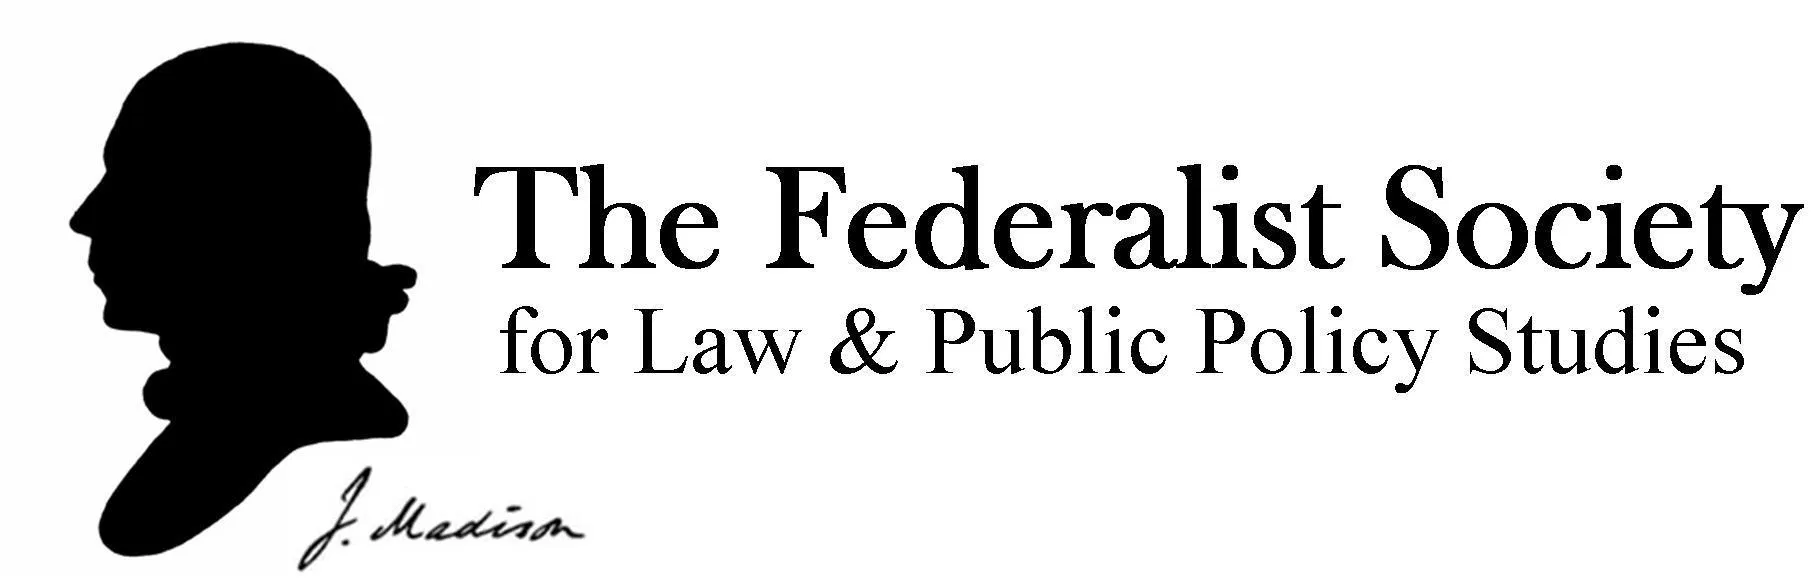 federalist-society-logo.jpg